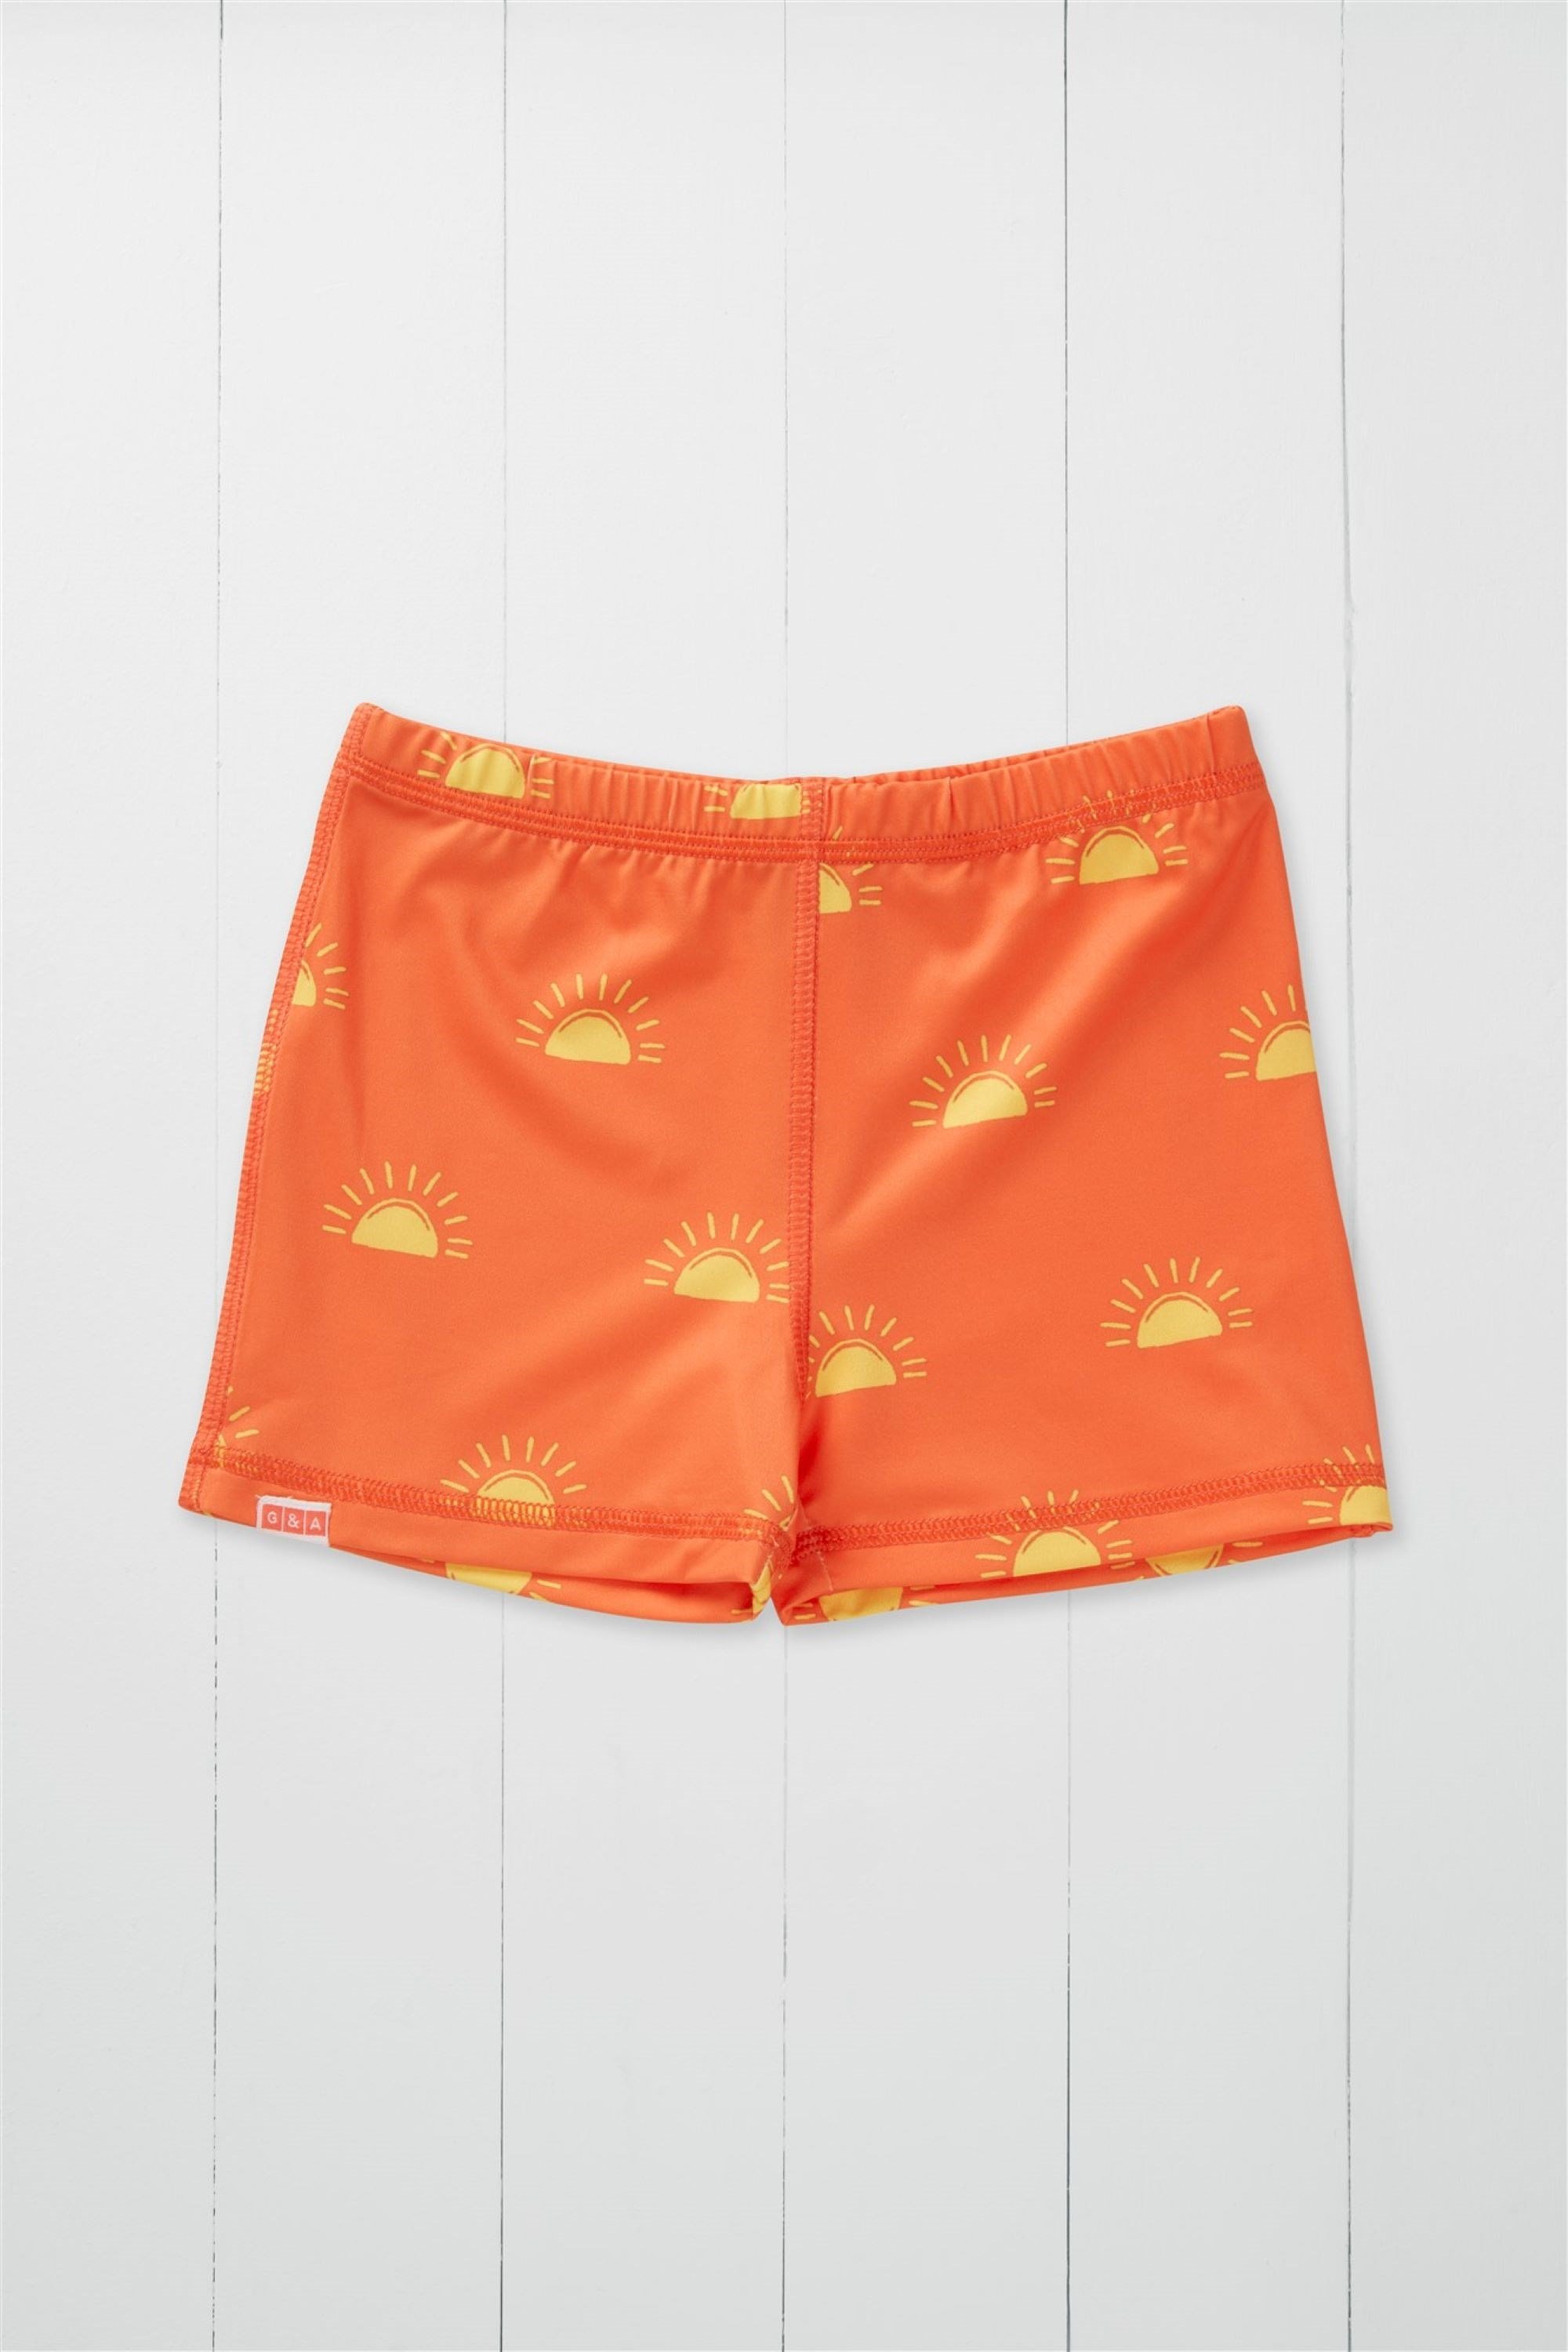 Sunprint Kids Shortie Swim Shorts -